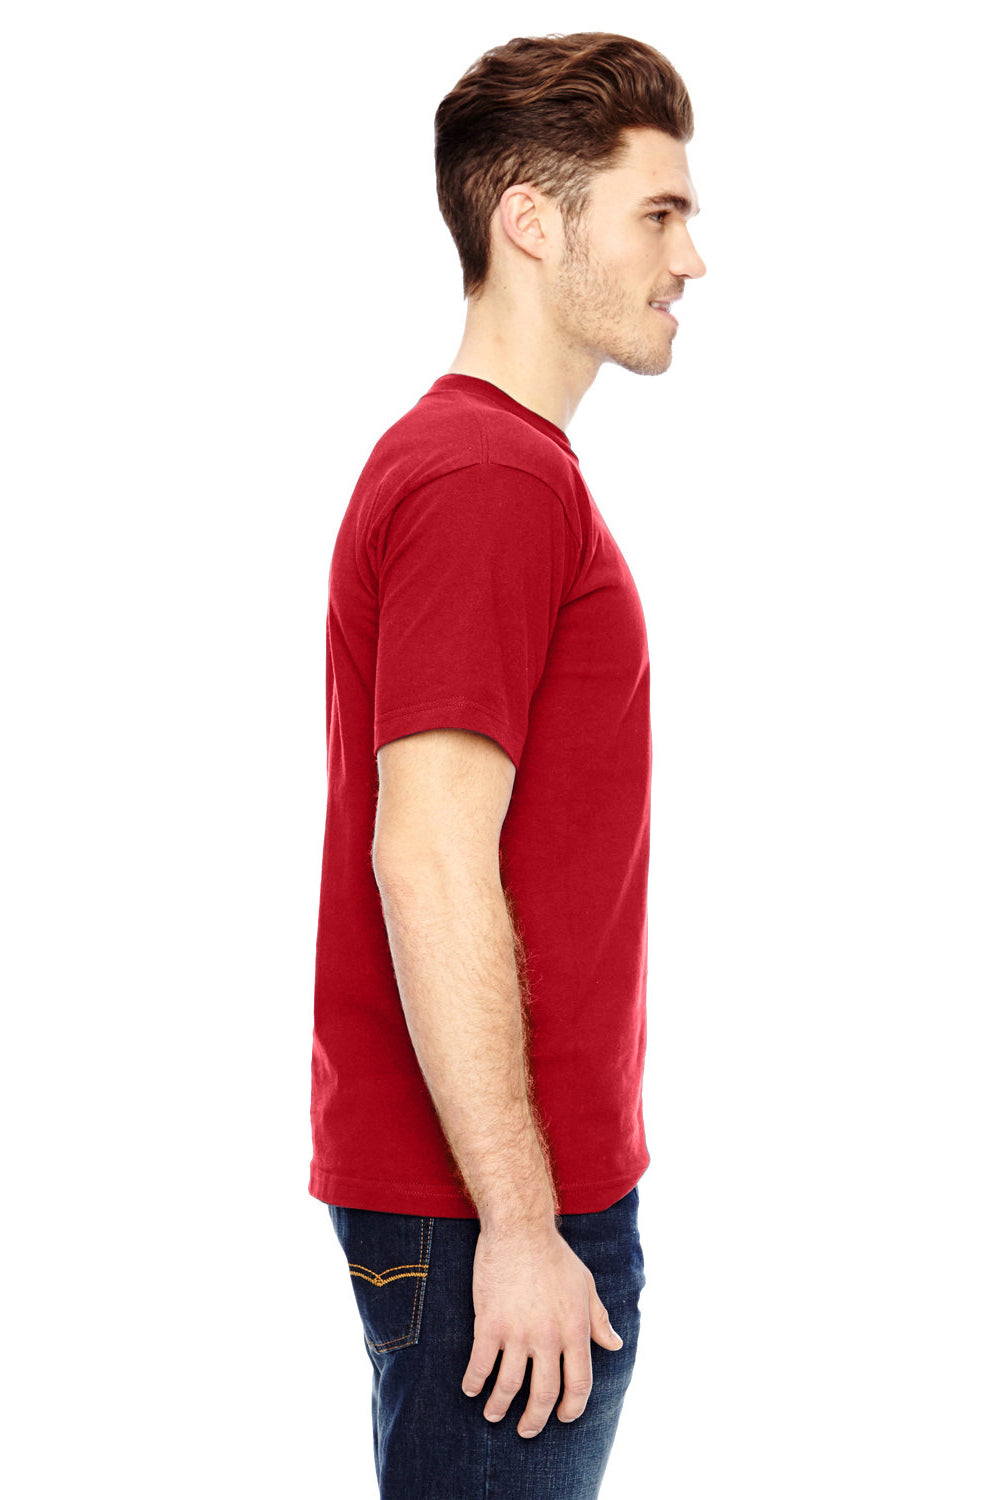 Bayside BA7100 Mens USA Made Short Sleeve Crewneck T-Shirt w/ Pocket Red Model Side